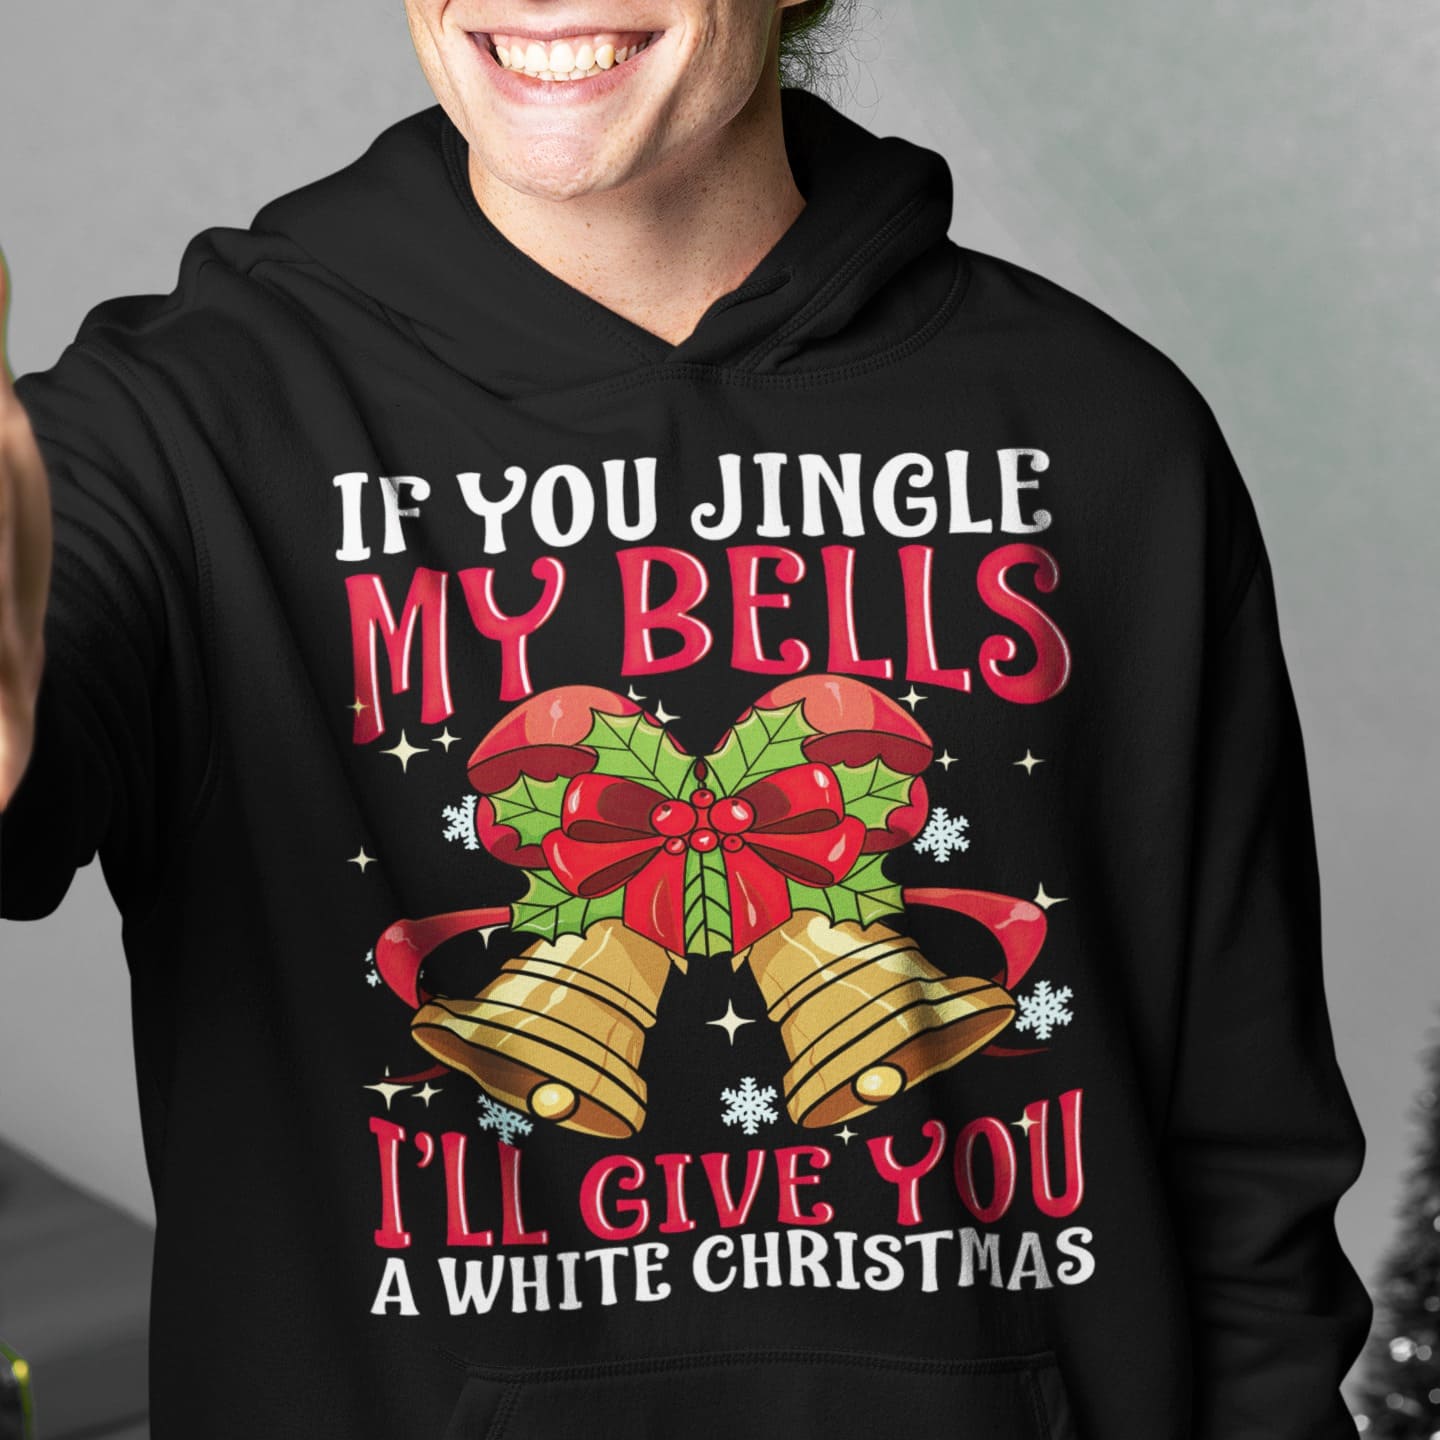 If you jingle my bells I'll give you a white Christmas - Jingle bells, Christmas day gift